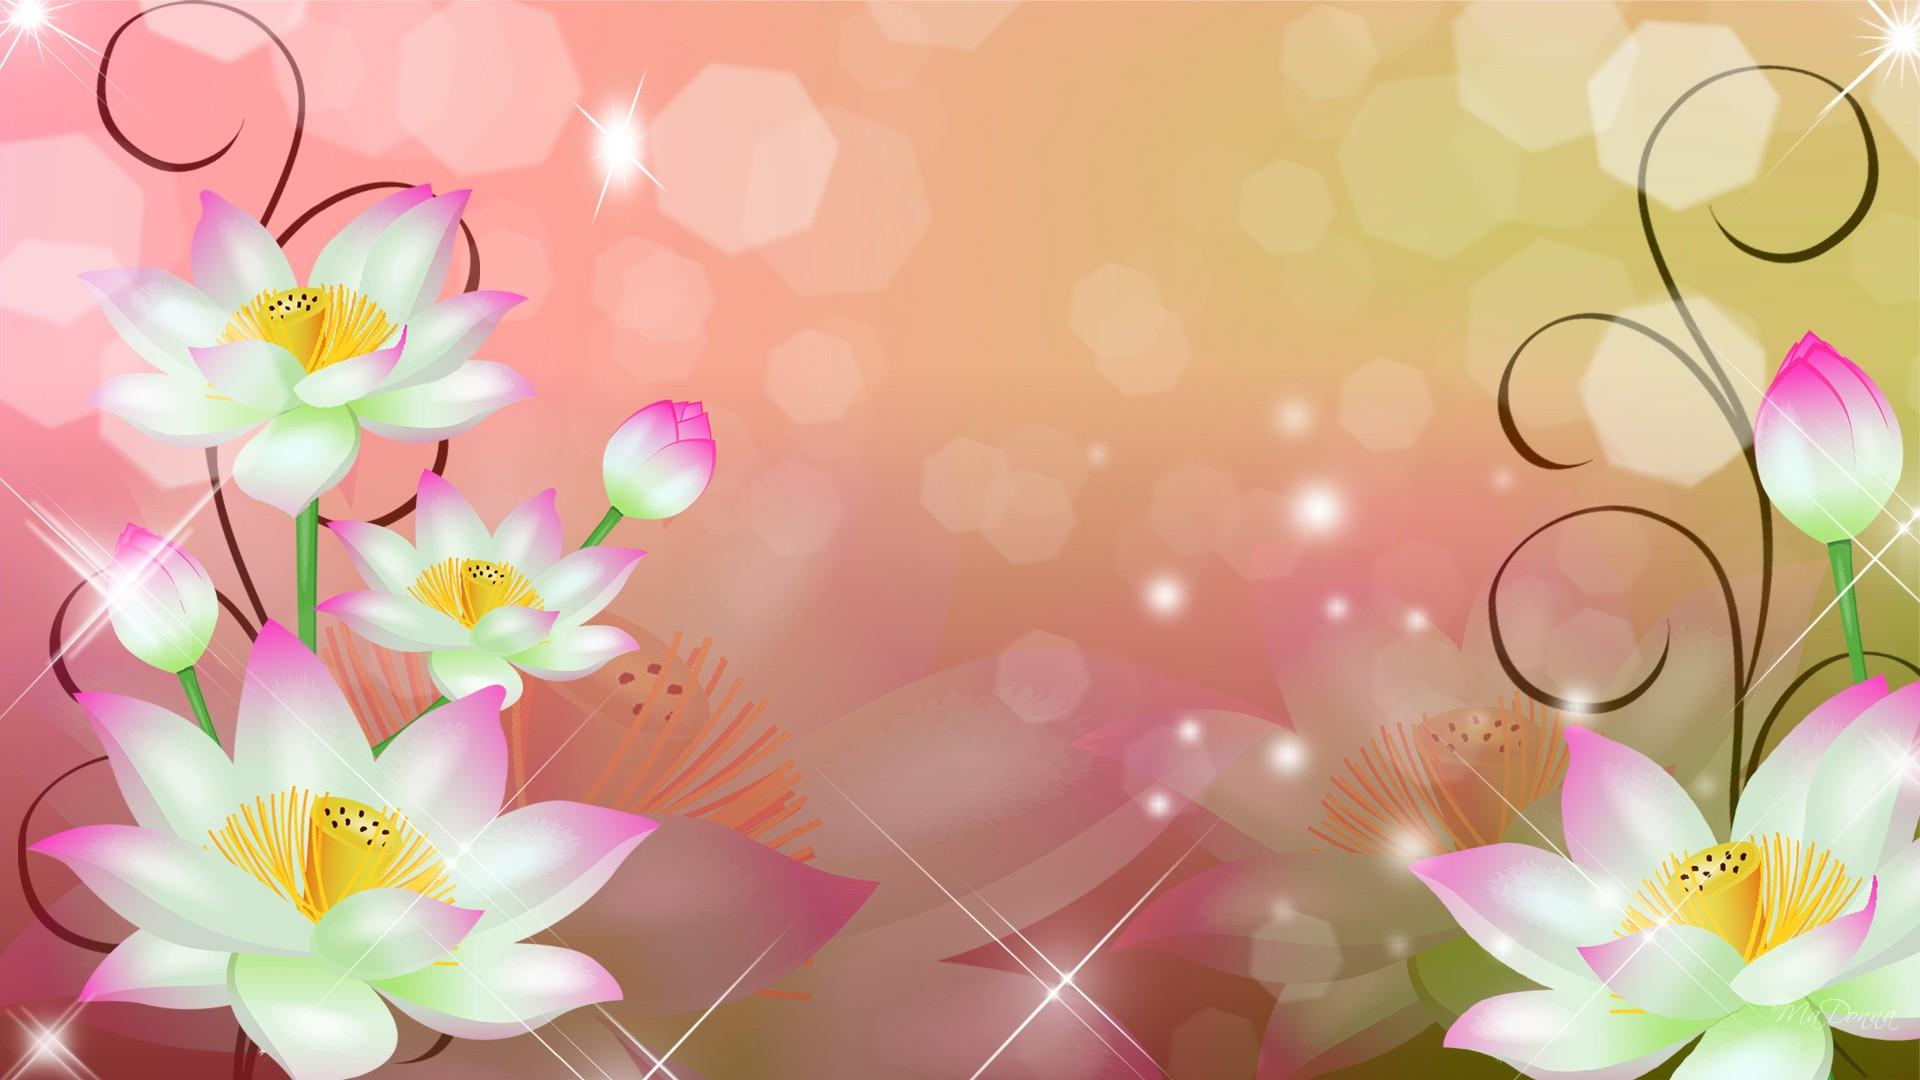 Flower Wallpaper Images For Desktop 5 HD Wallpapers